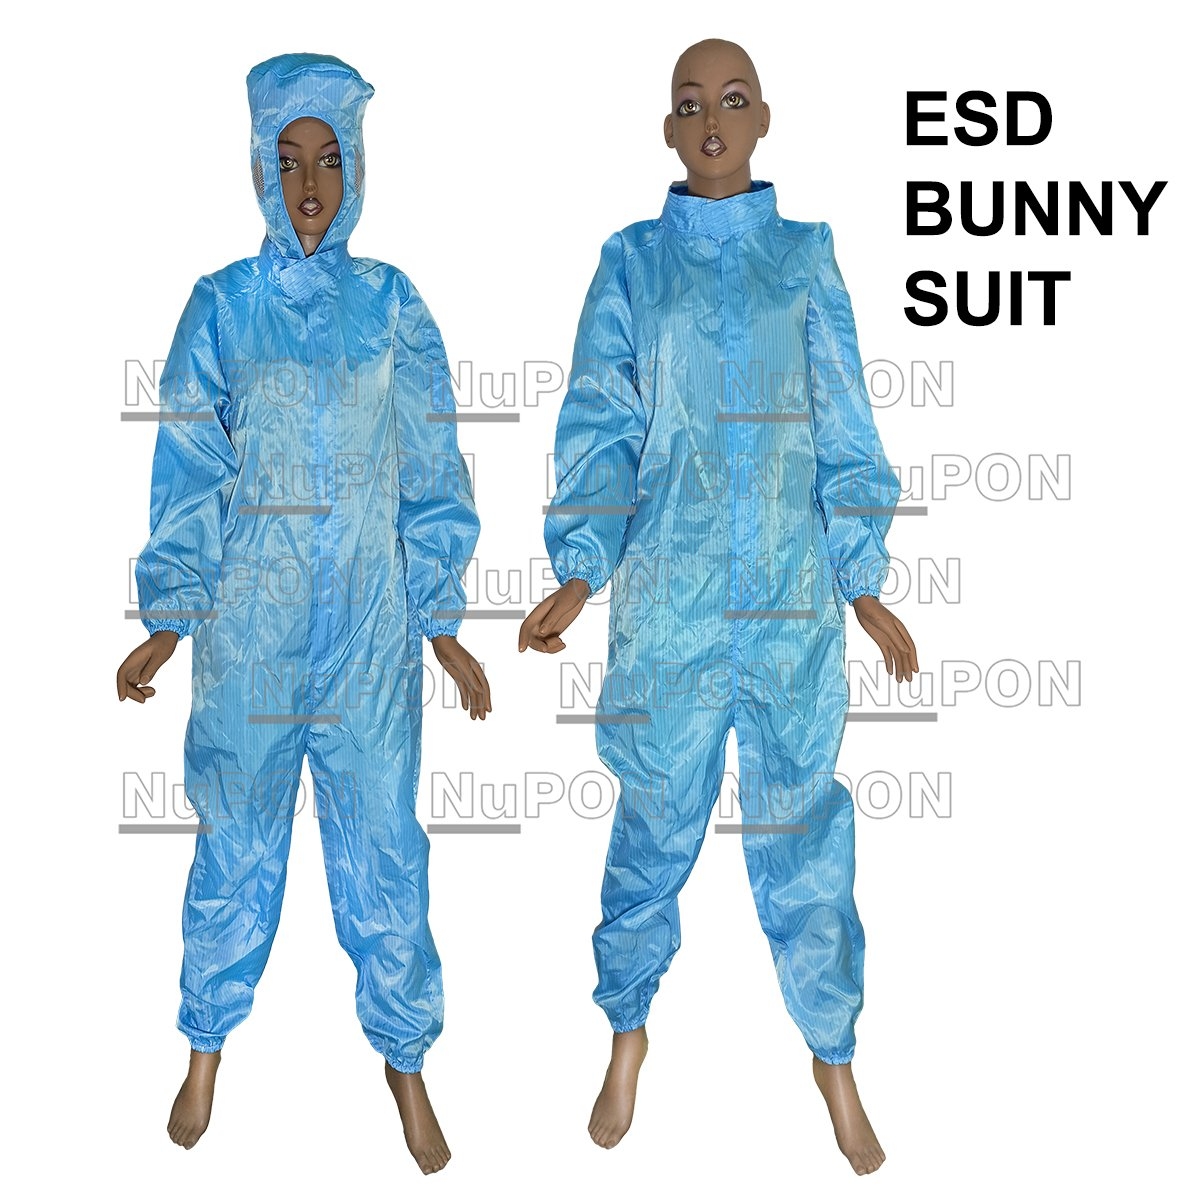 ESD Bunny Suit